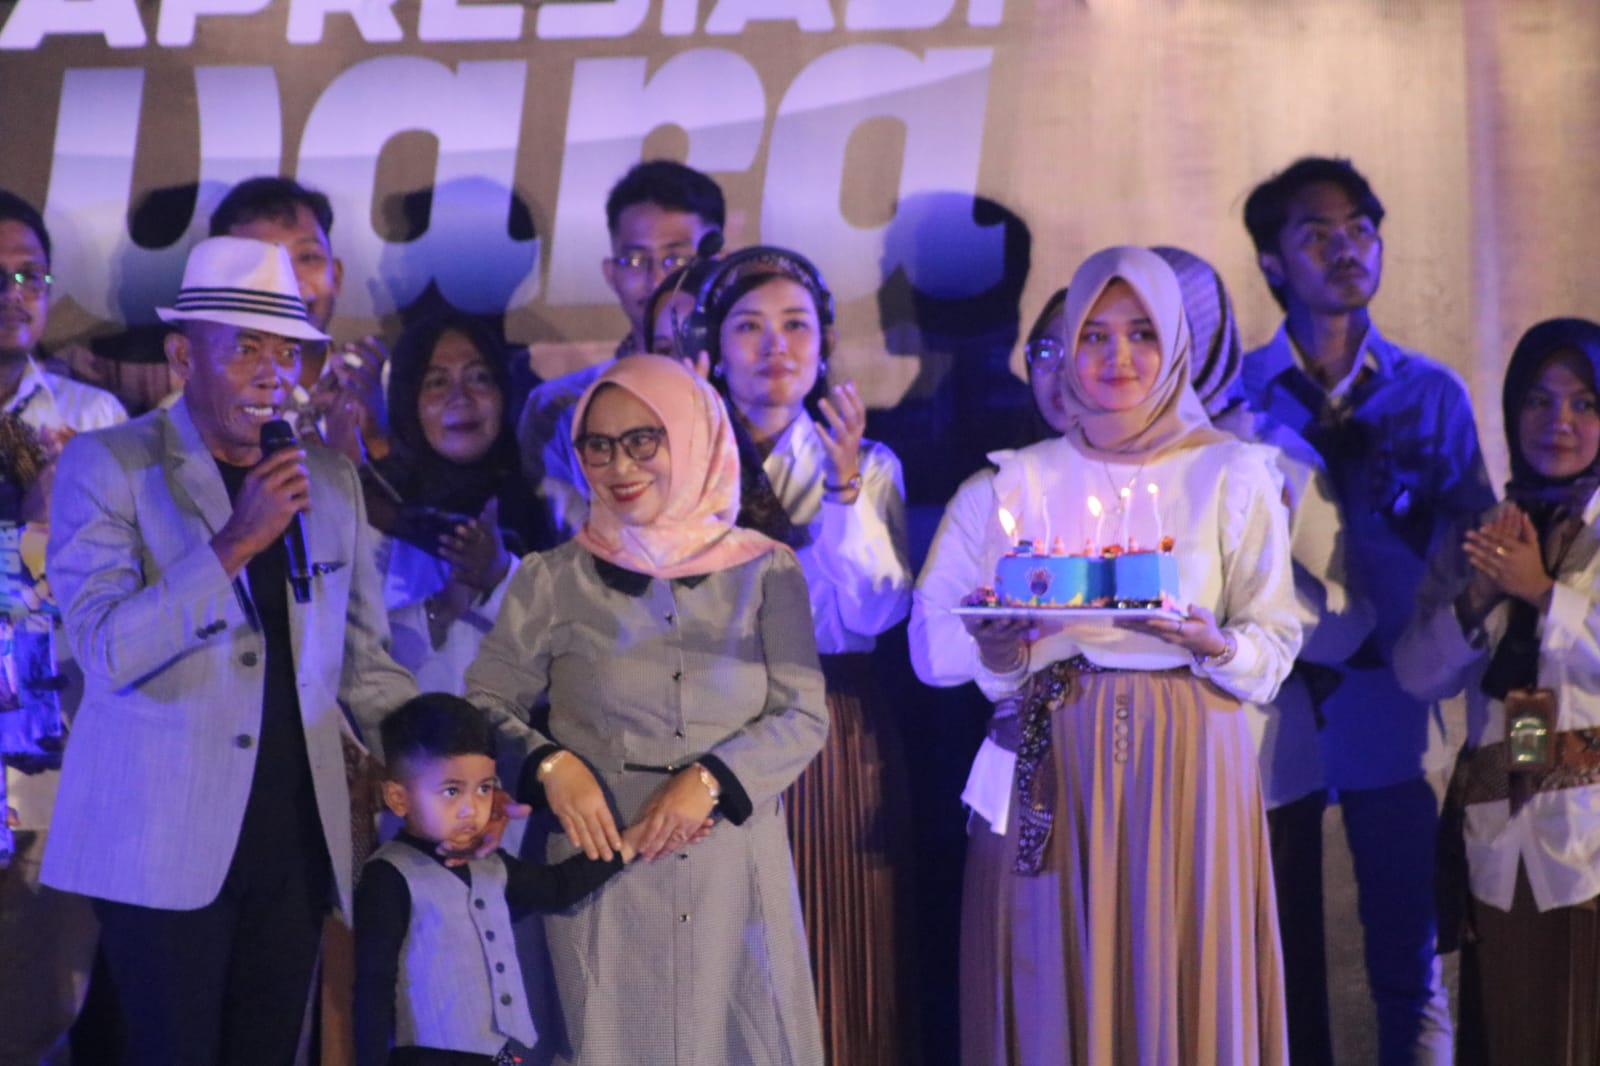 Bupati Ruhimat merayakan ulang tahun cucunya di Malam Apresiasi Jawara.